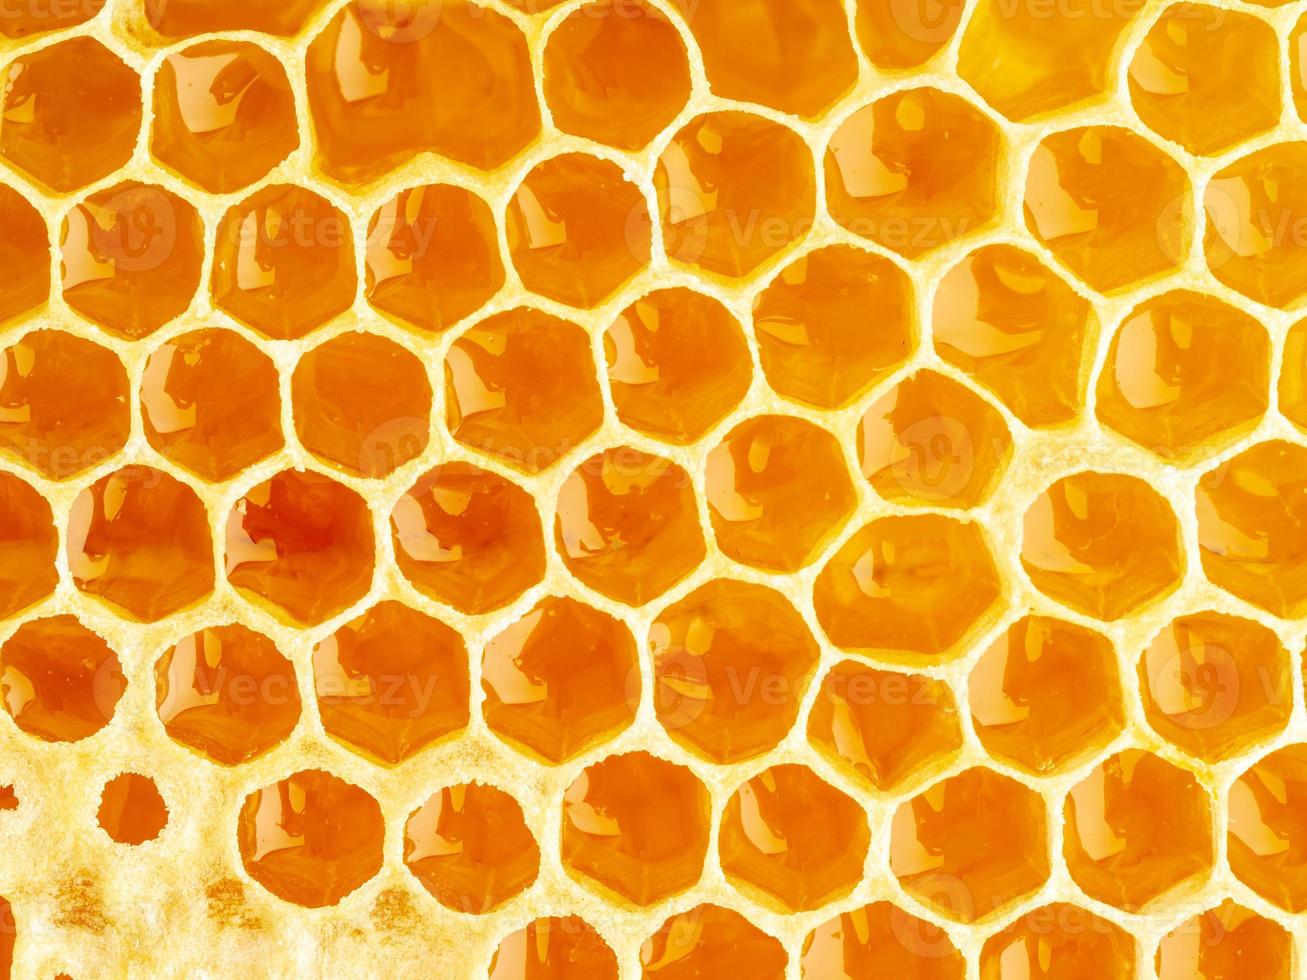 primo piano a nido d'ape d'ape, miele dolce gocciolante filante fresco, sfondo macro foto